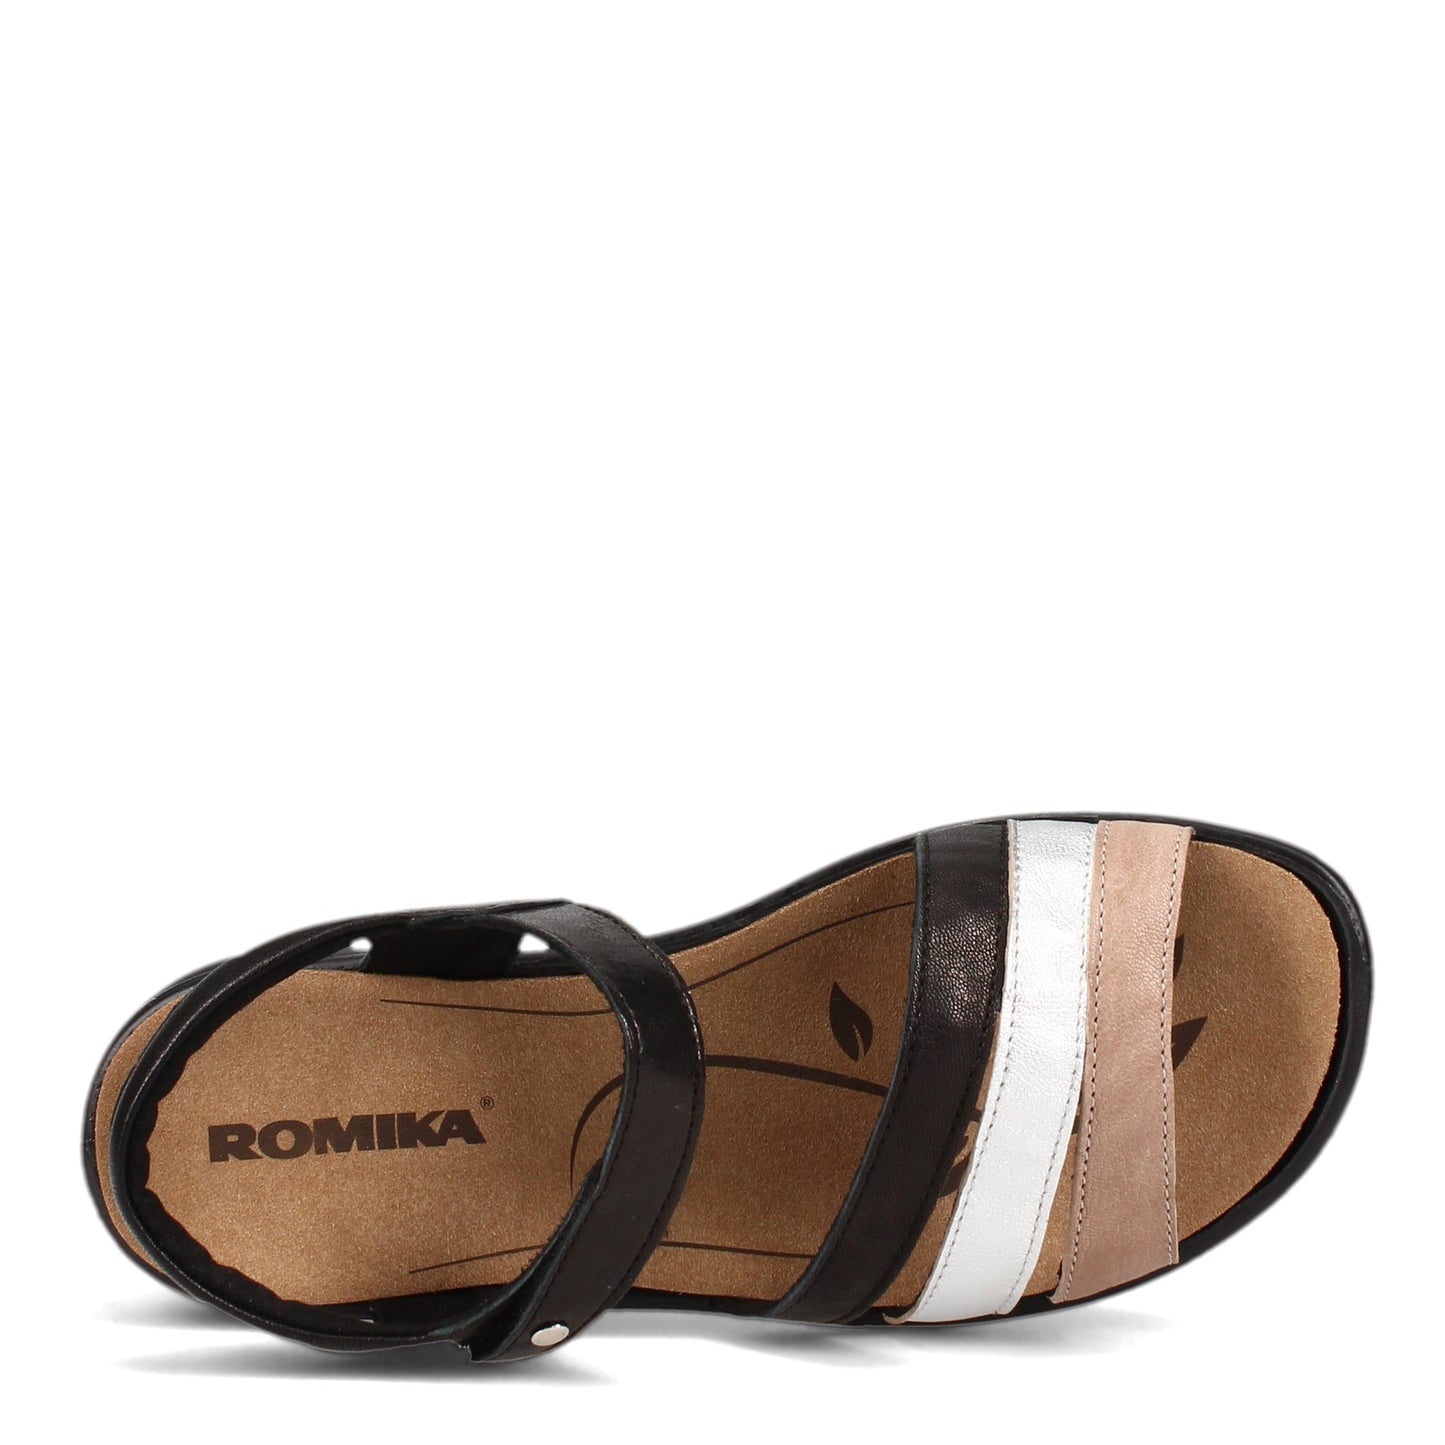 Peltz Shoes  Women's Romika Ibiza 111 Sandal BLACK / NATURAL MIX 16111-210102